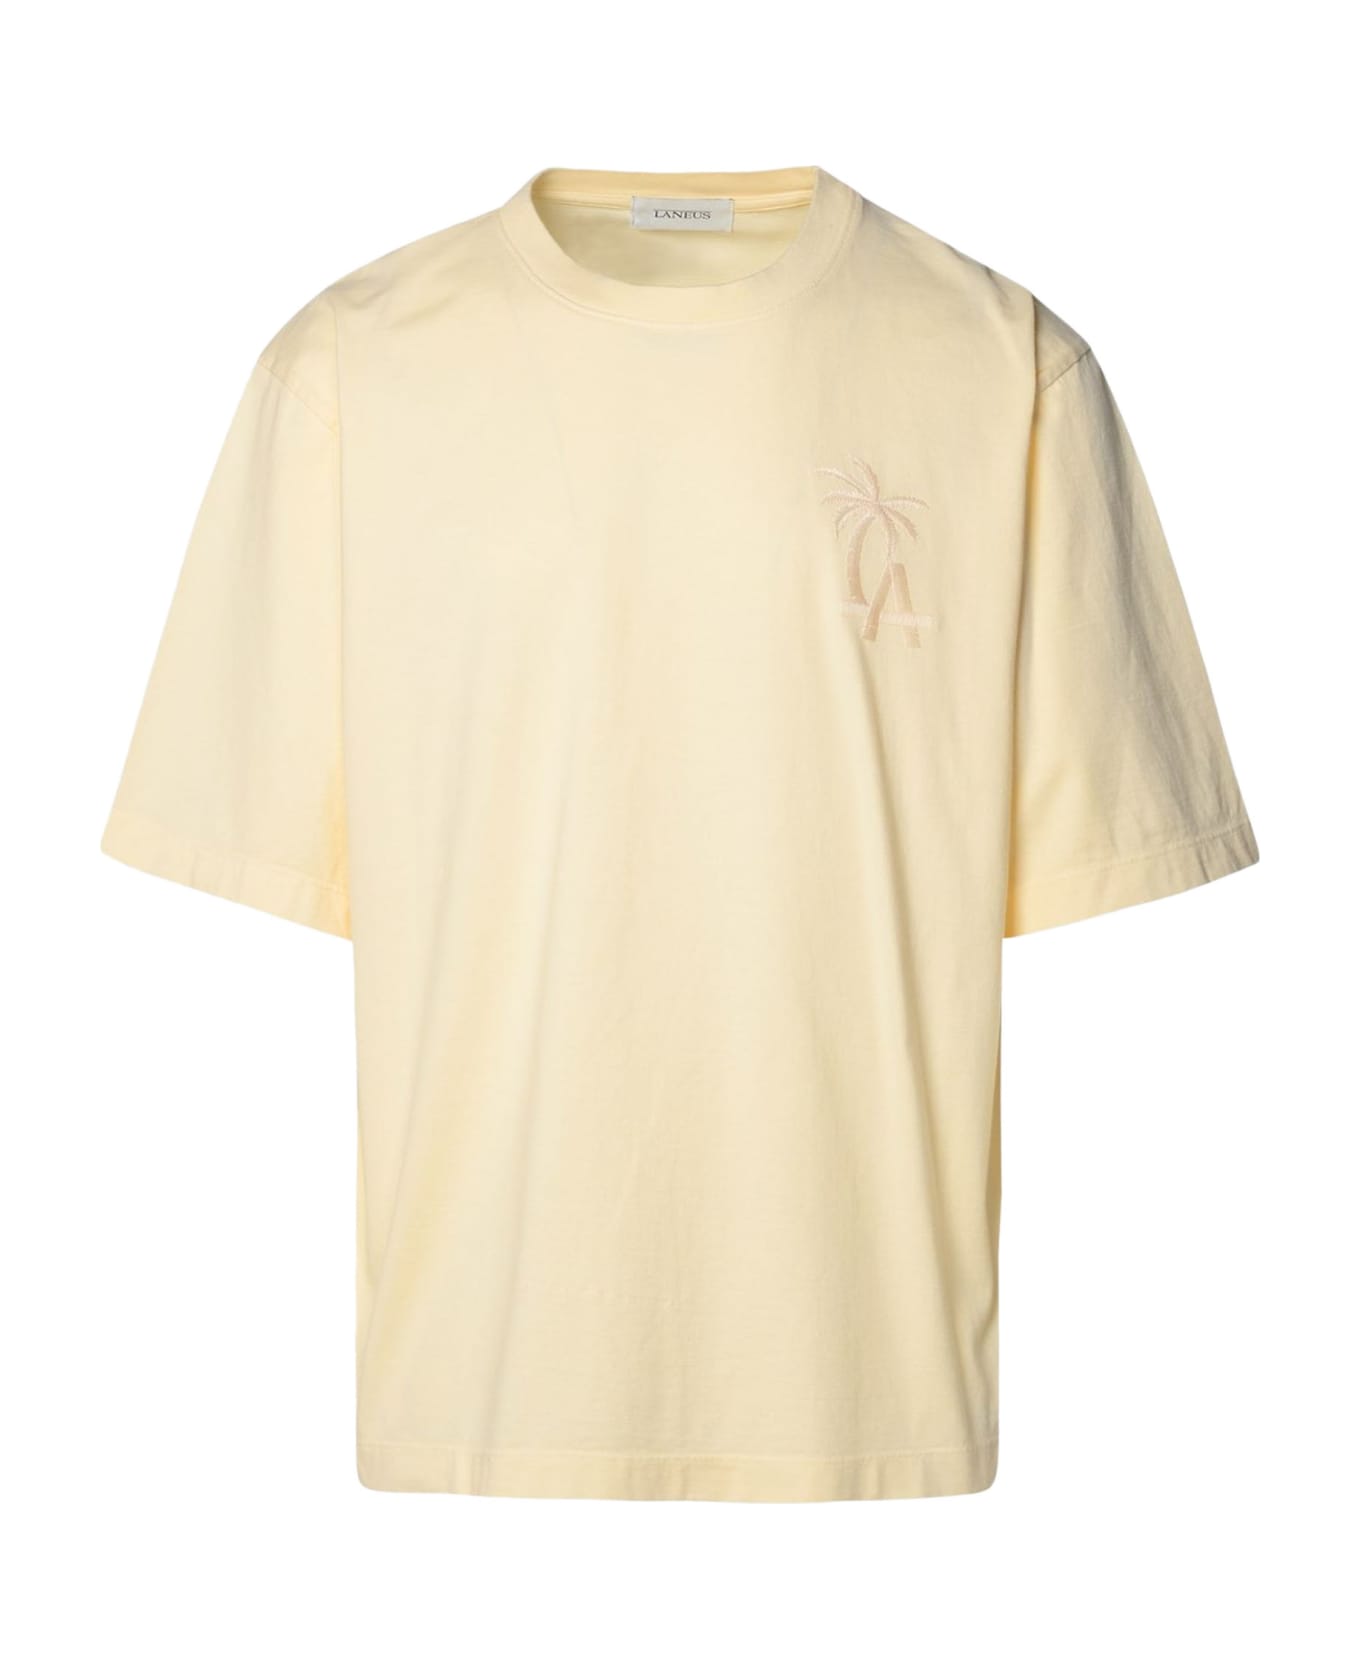 Laneus Embroidered T-shirt - Latte シャツ